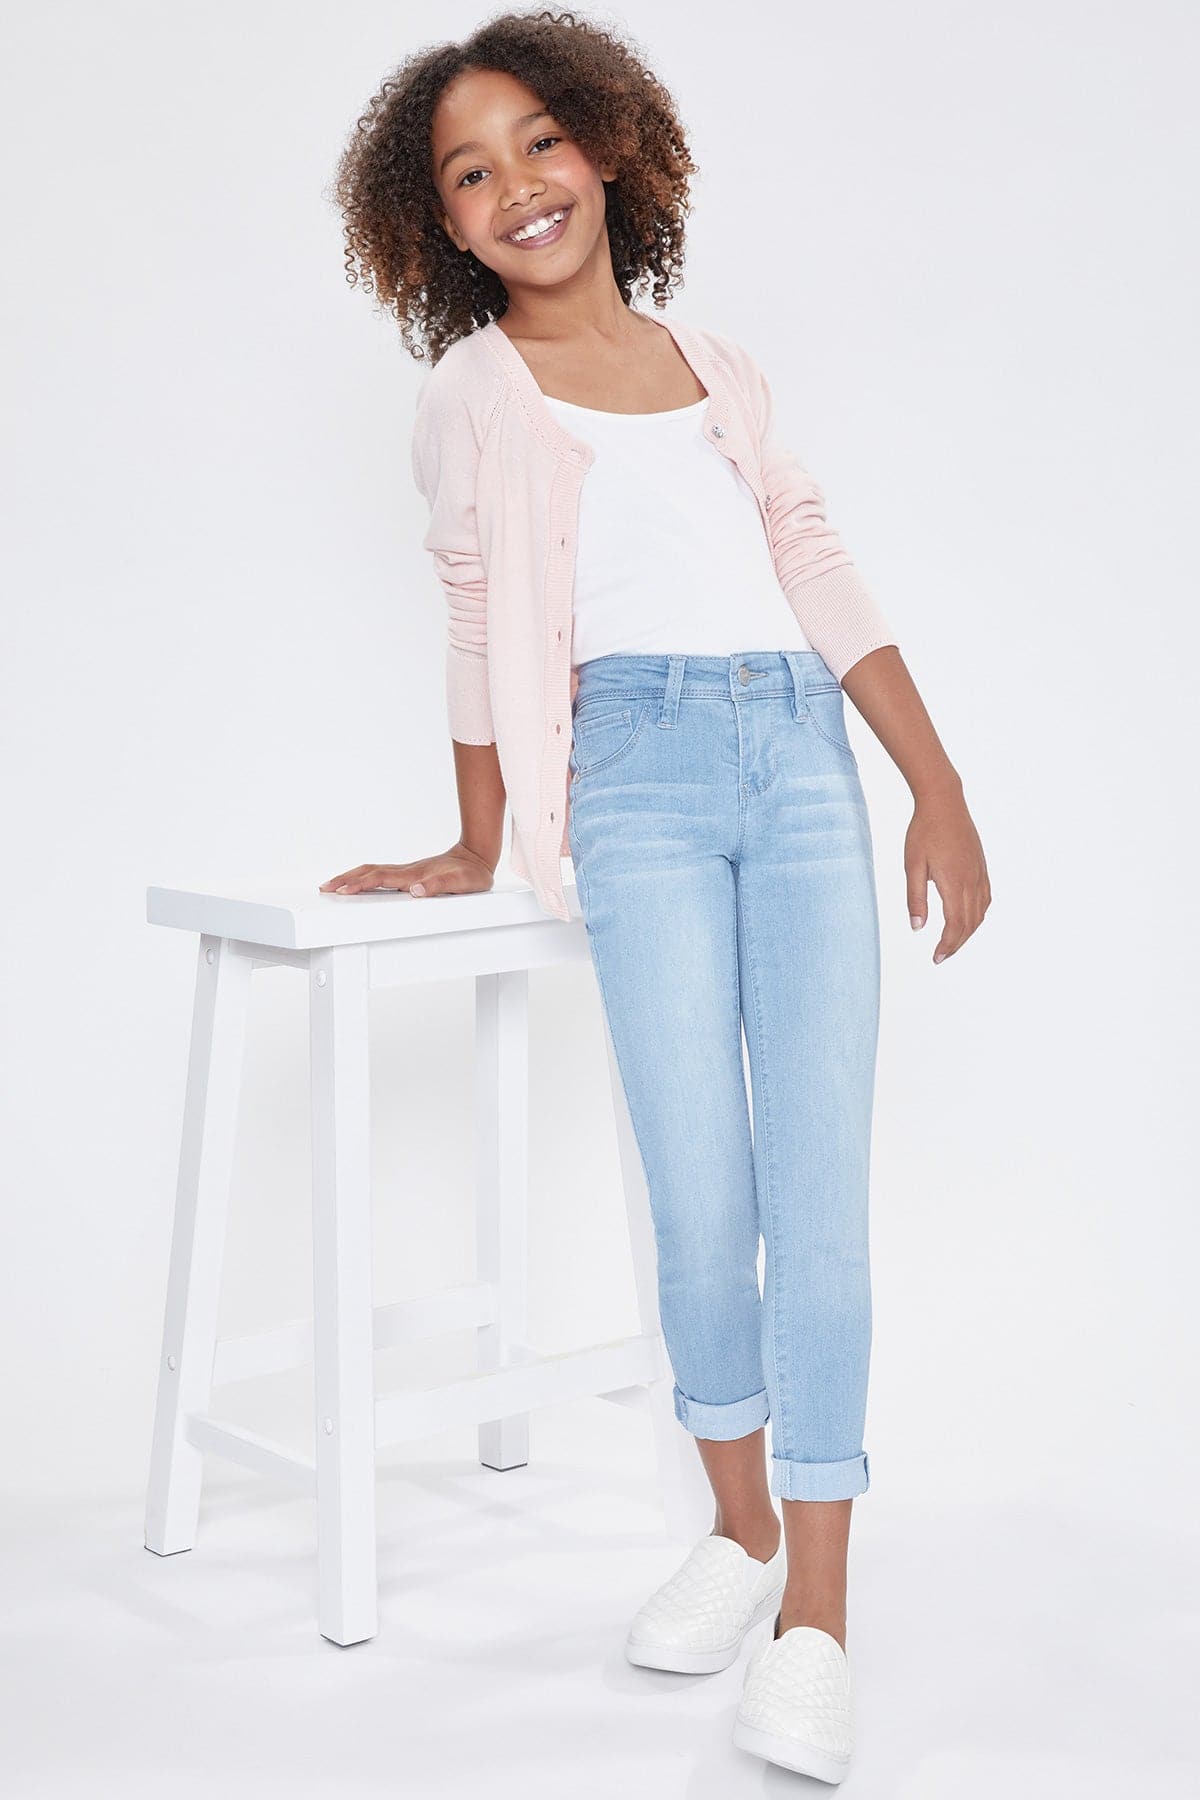 Neueste Informationen Girls Optional YMI Denim – Cuff JEANS YMI Skinny from Jeans